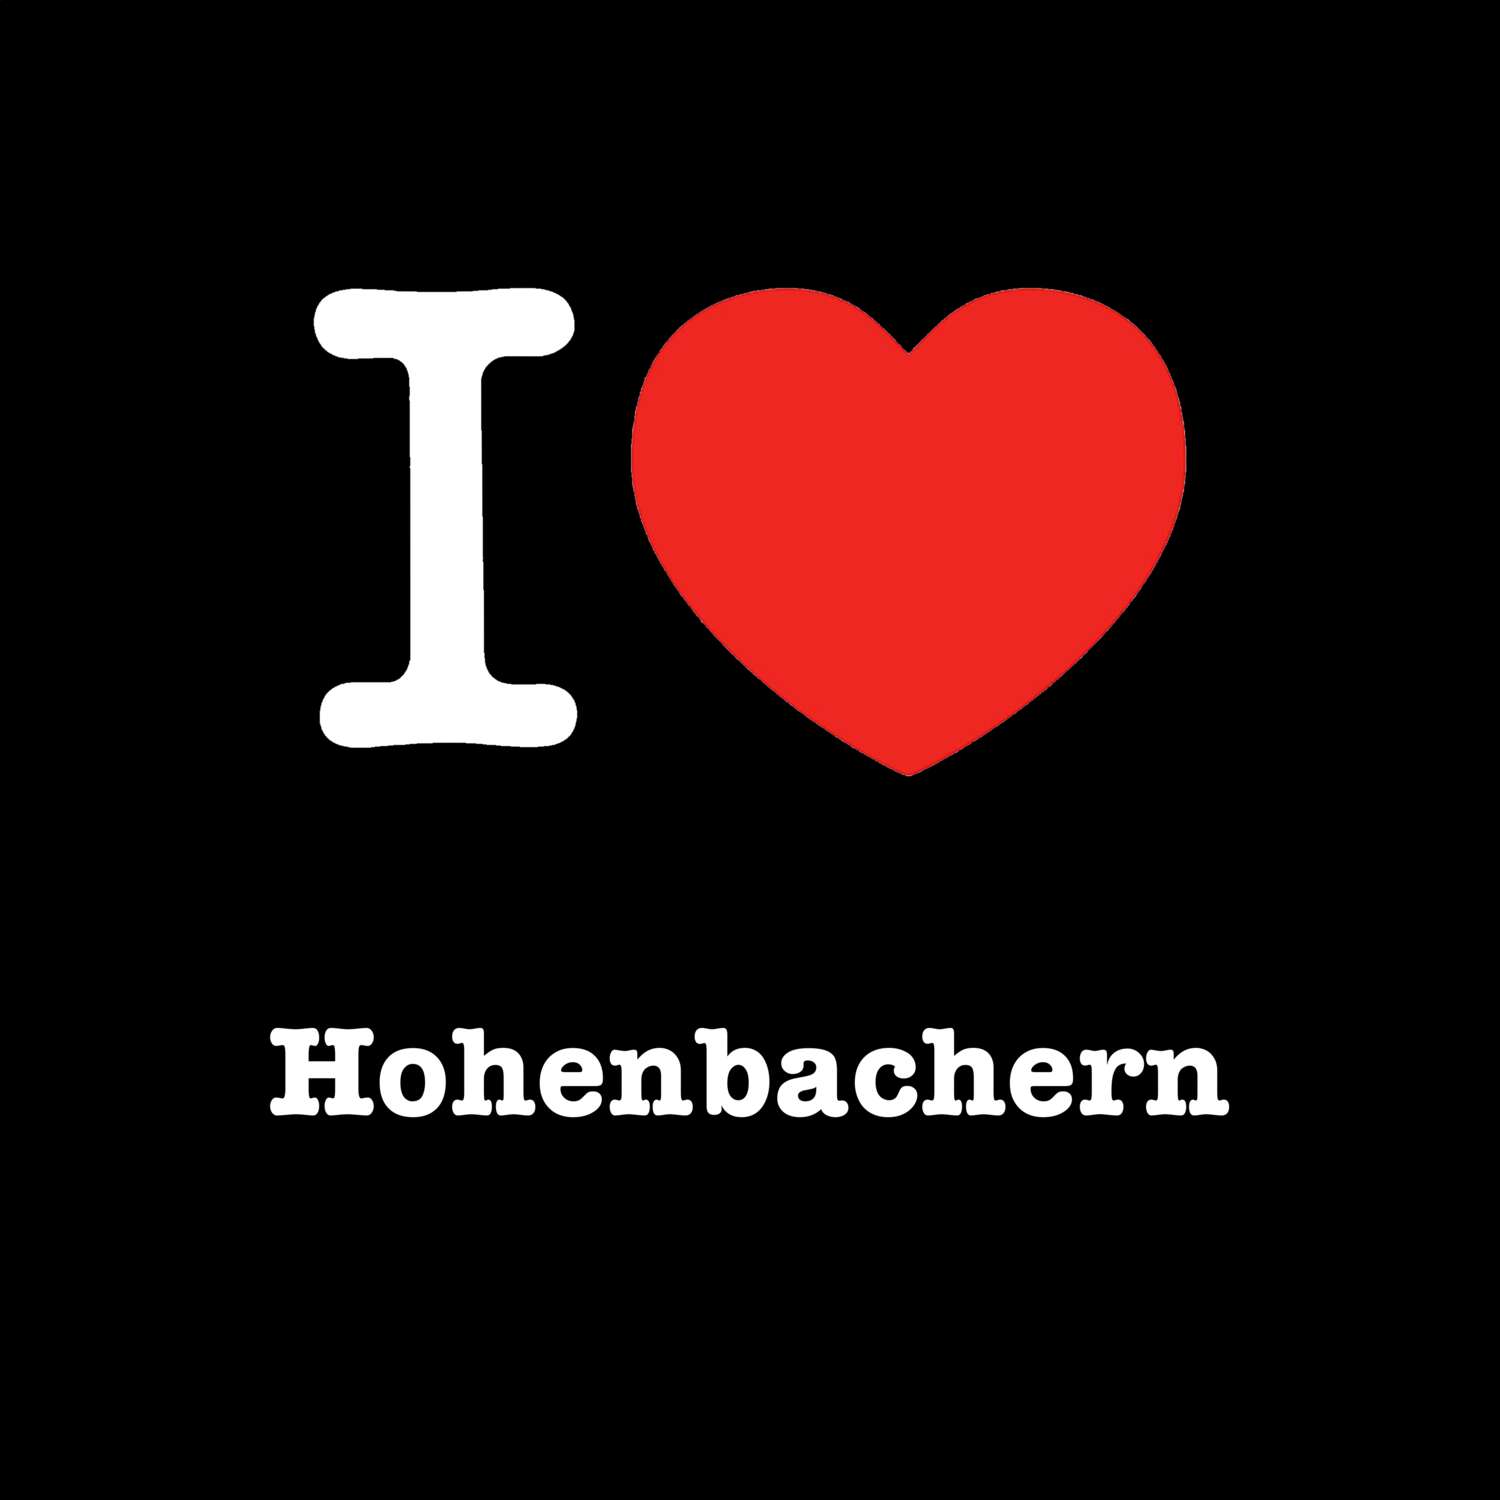 Hohenbachern T-Shirt »I love«